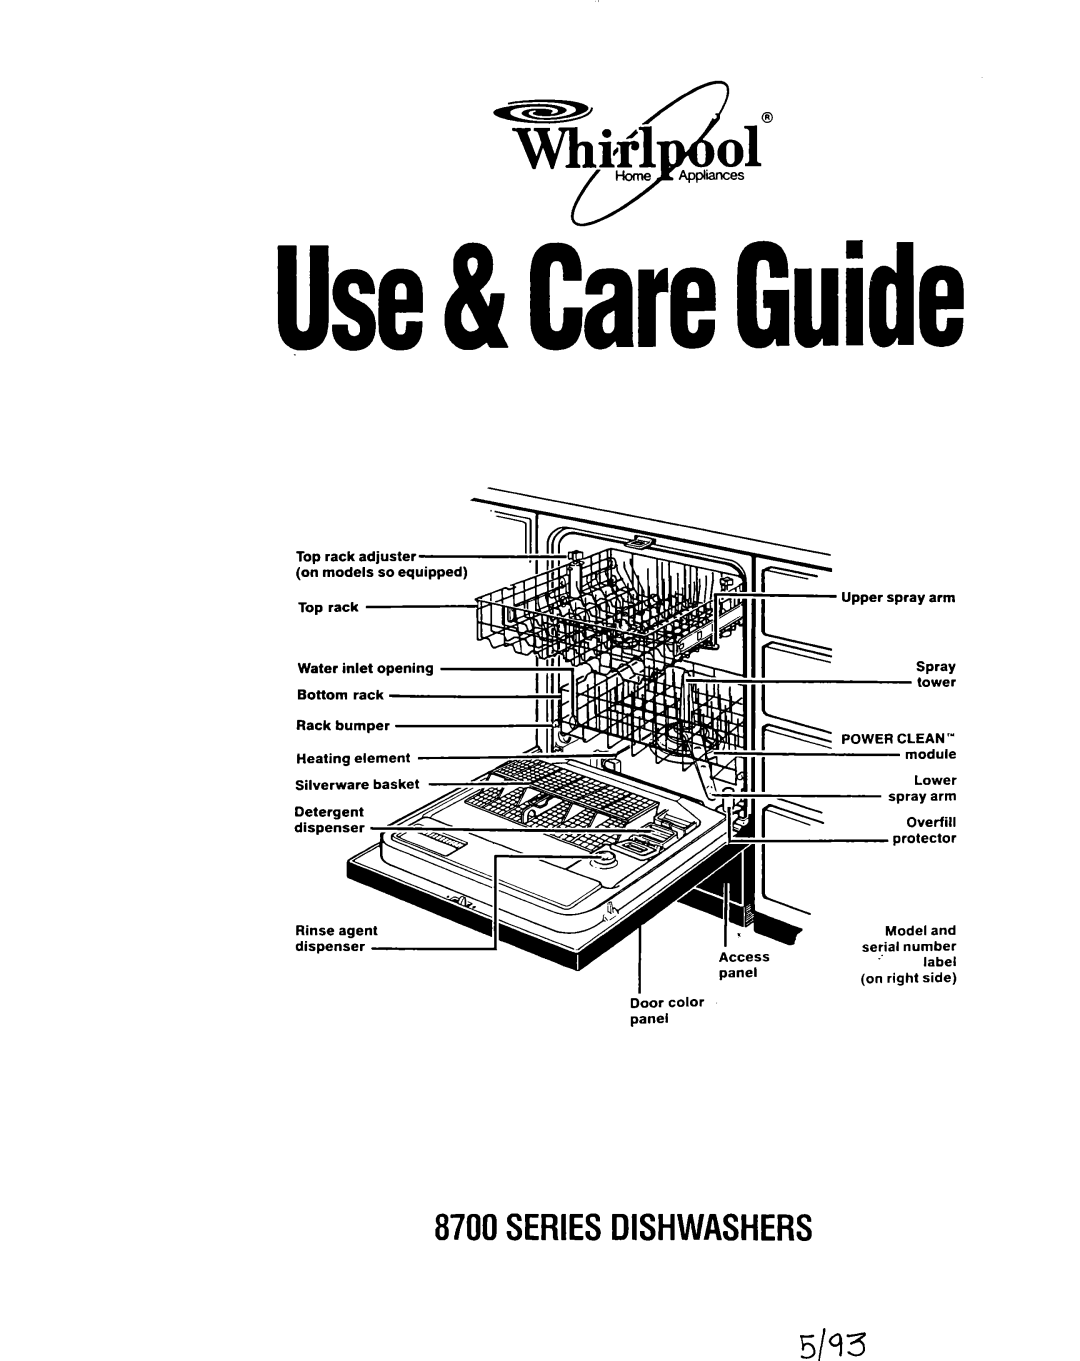 Whirlpool manual 5/93, AcceSS, Use&CareGuide, 8700SERIESDISHWASHERS 